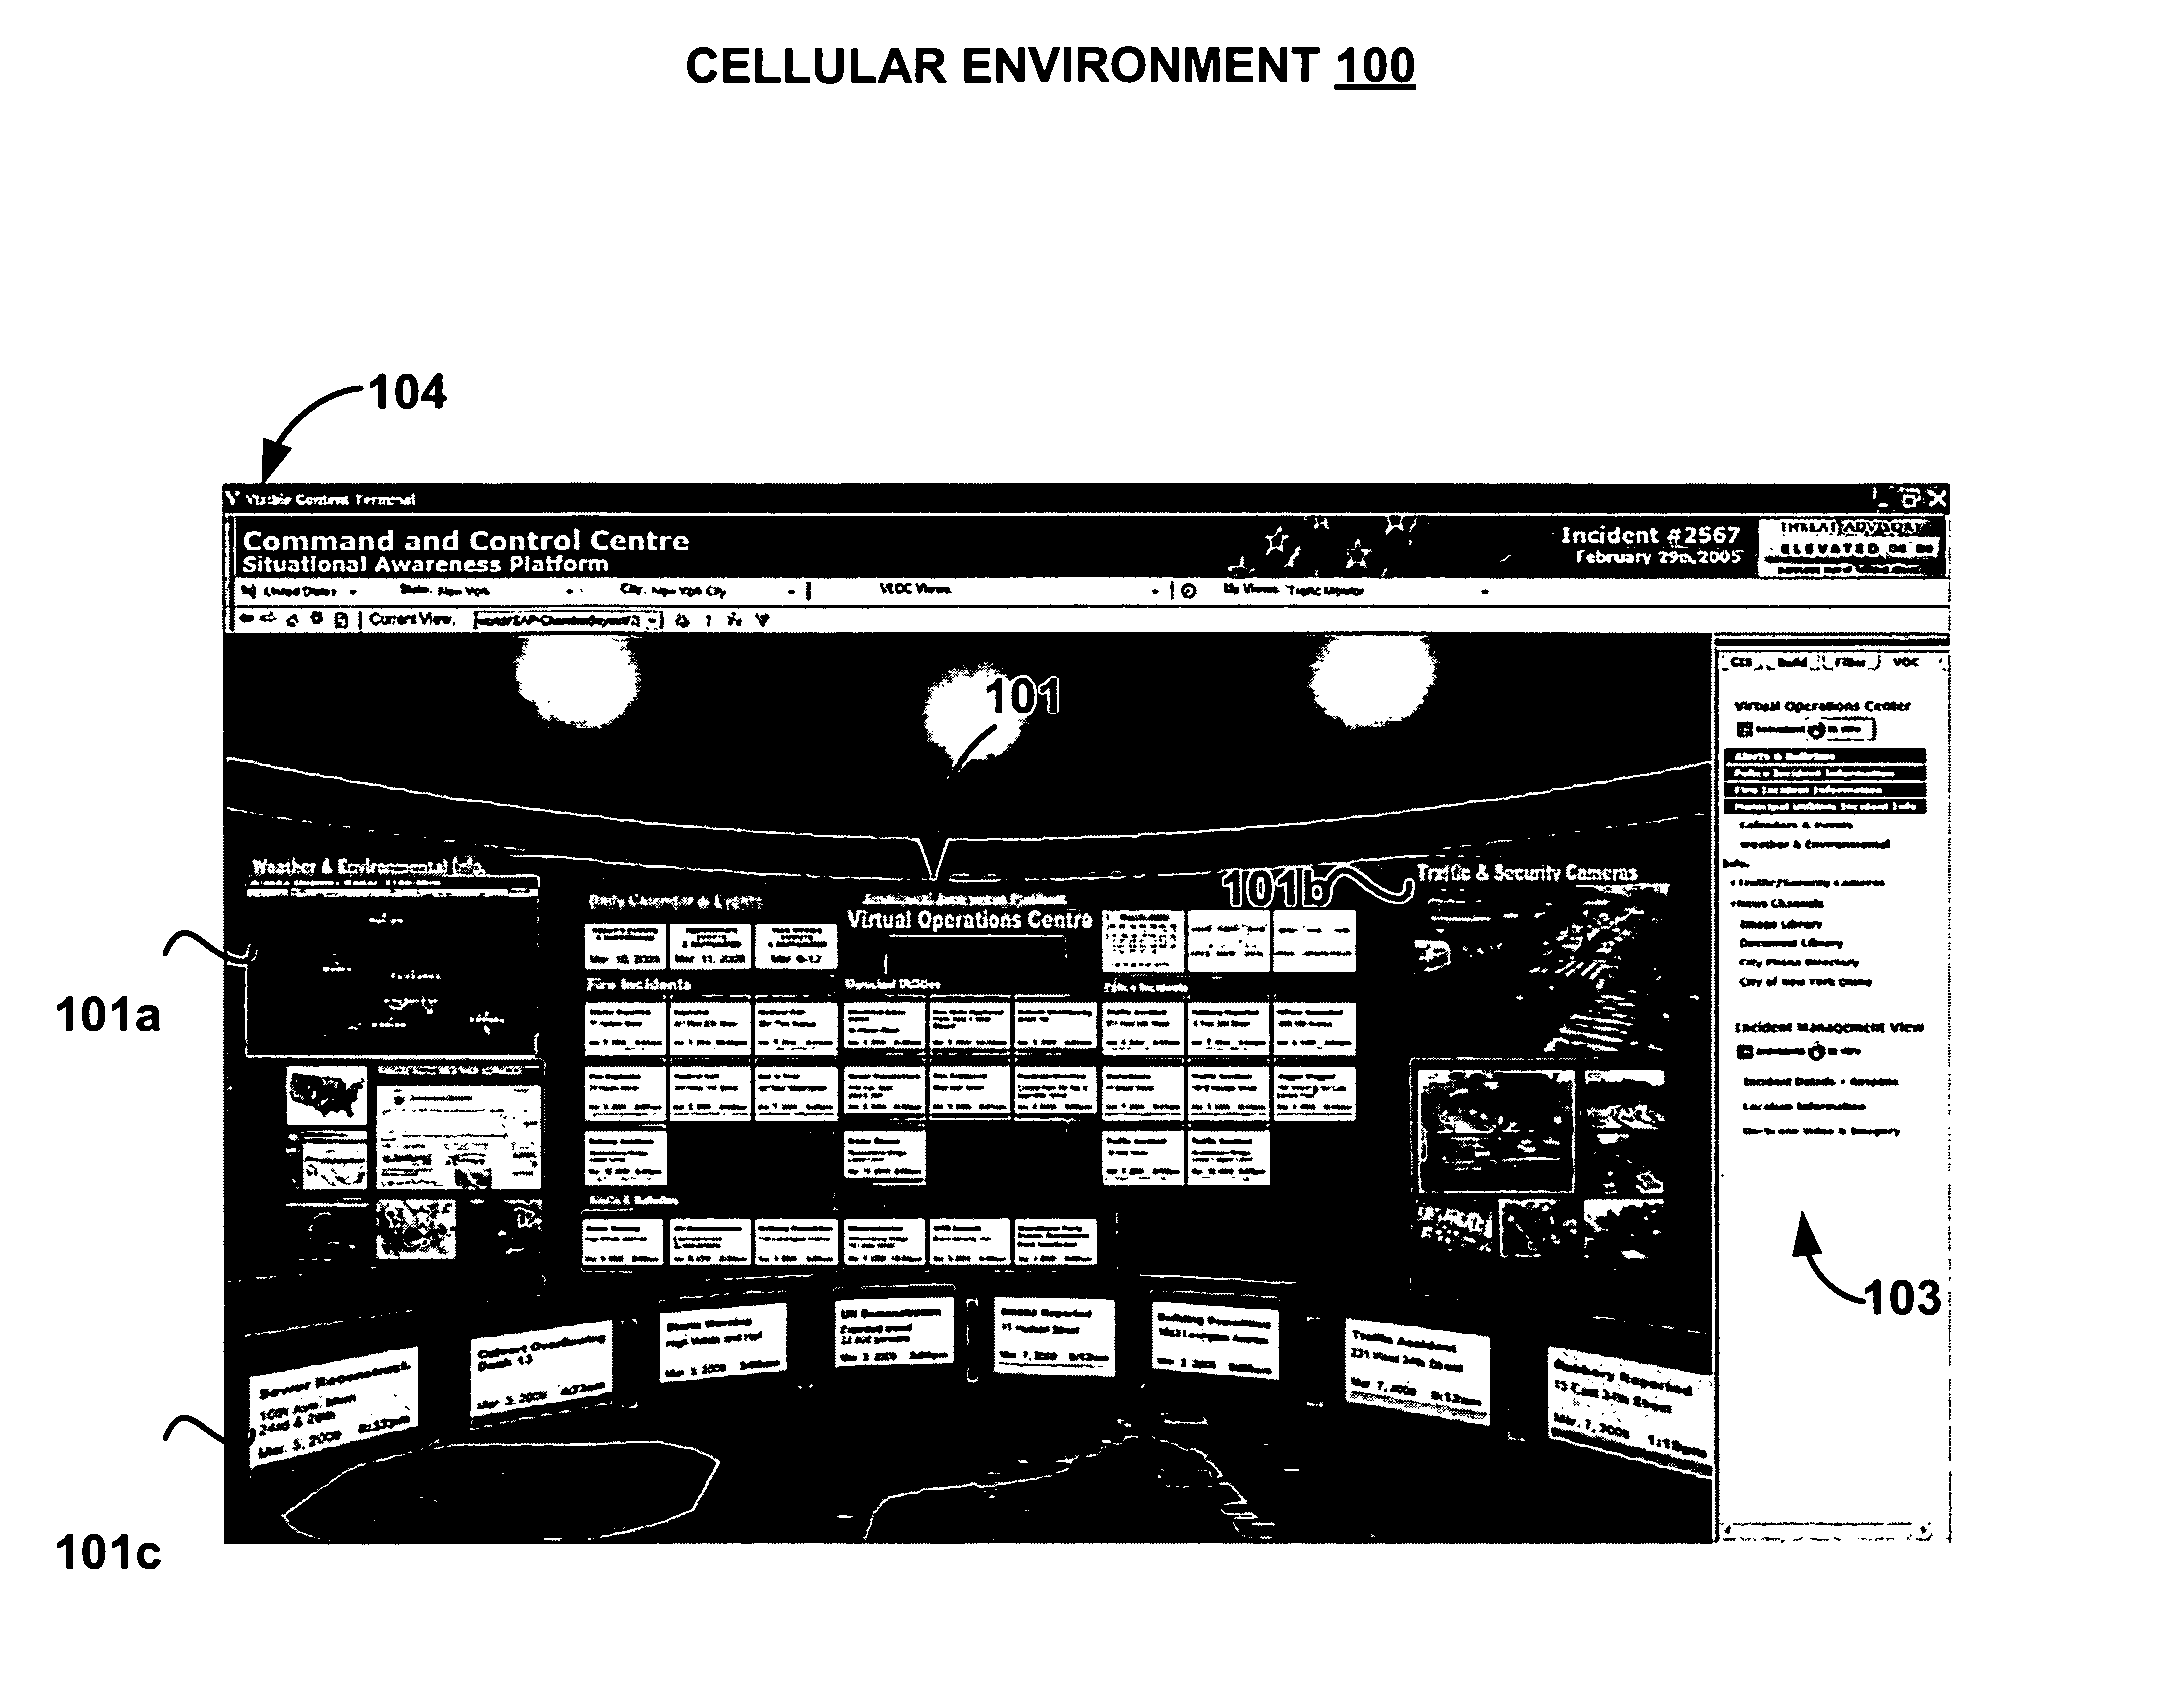 Cellular user interface